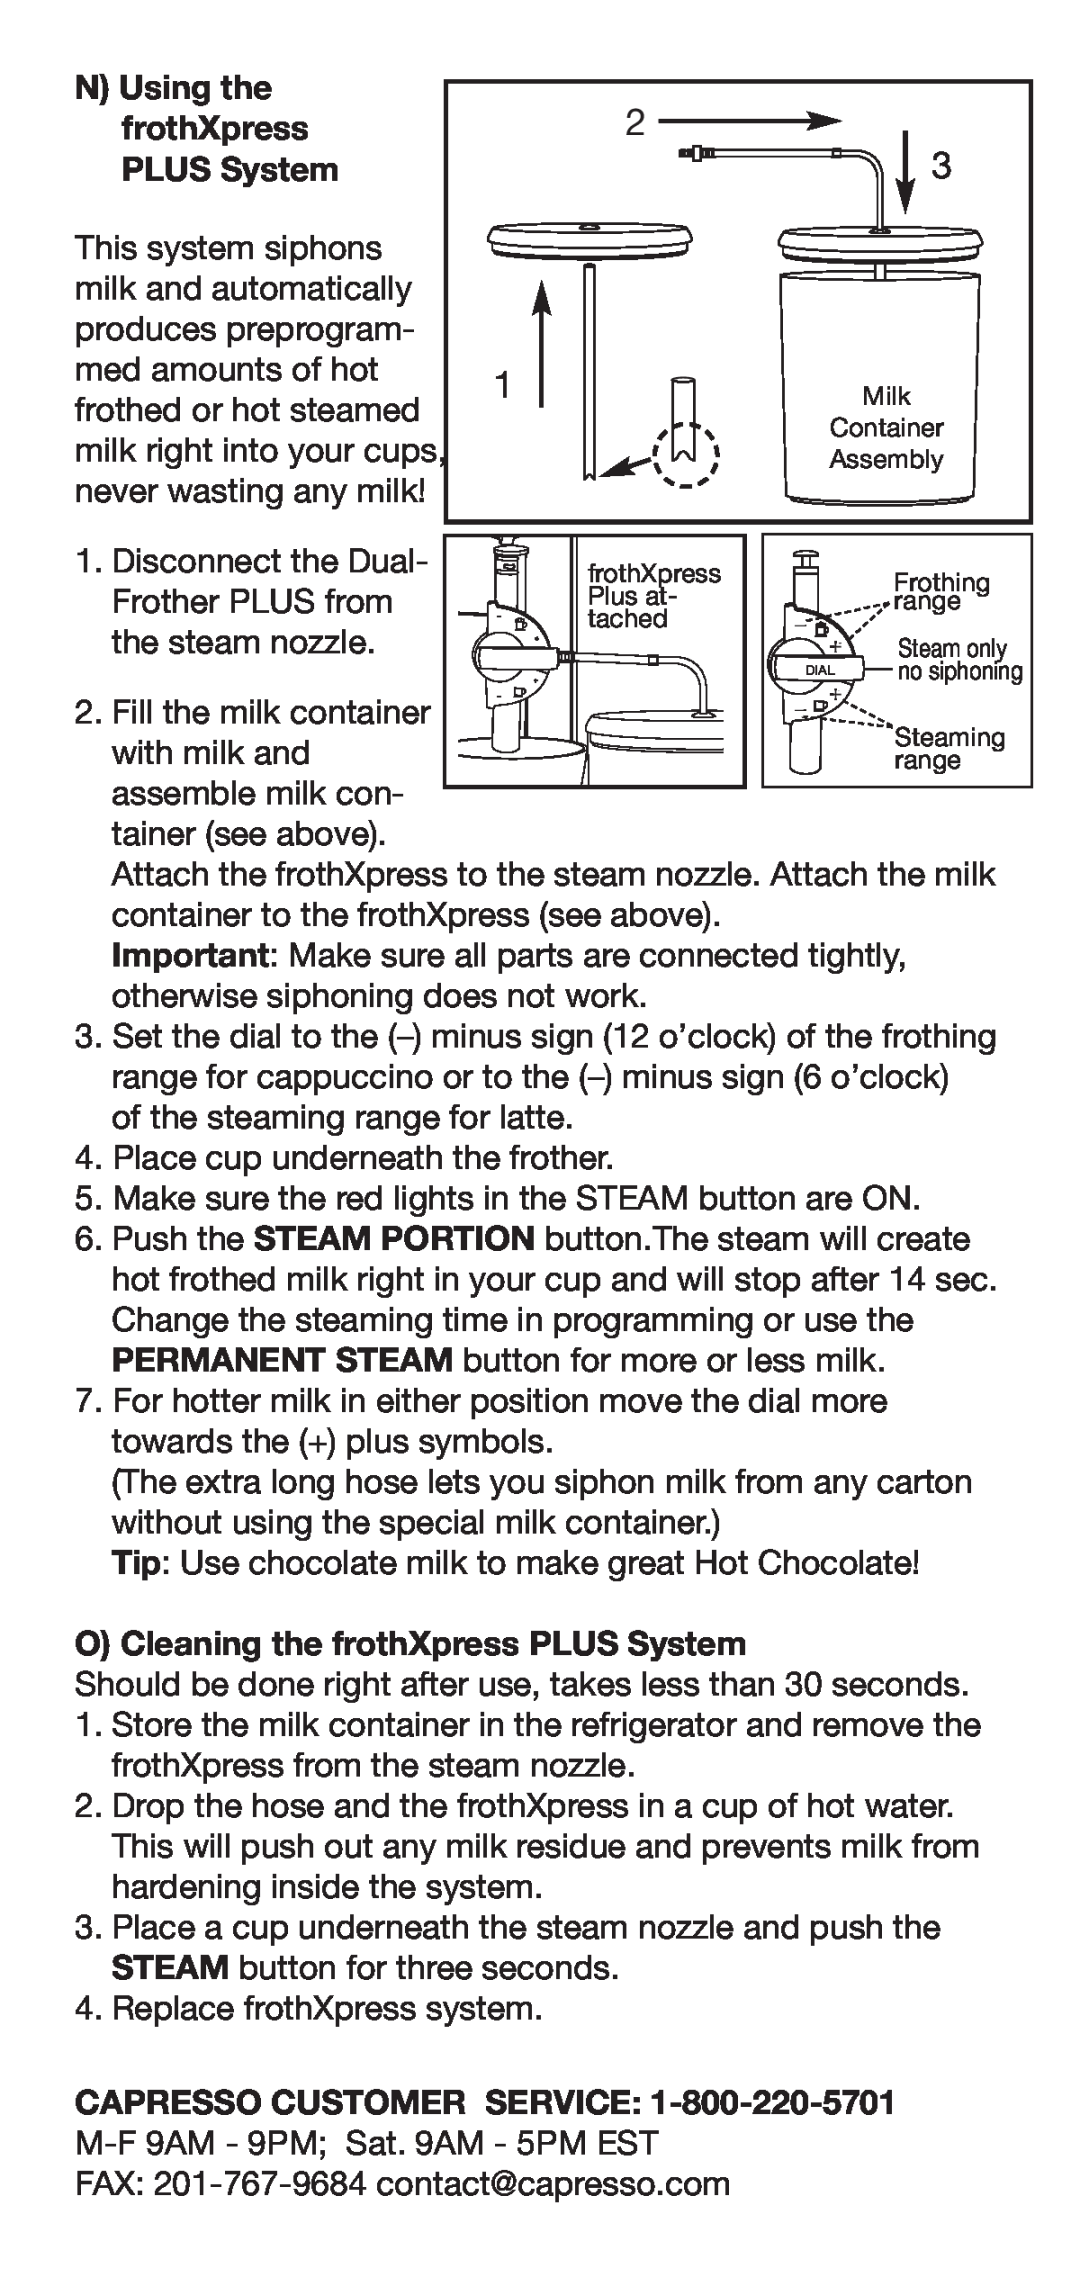 Capresso Coffeemaker manual N Using the frothXpress PLUS System, O Cleaning the frothXpress PLUS System 